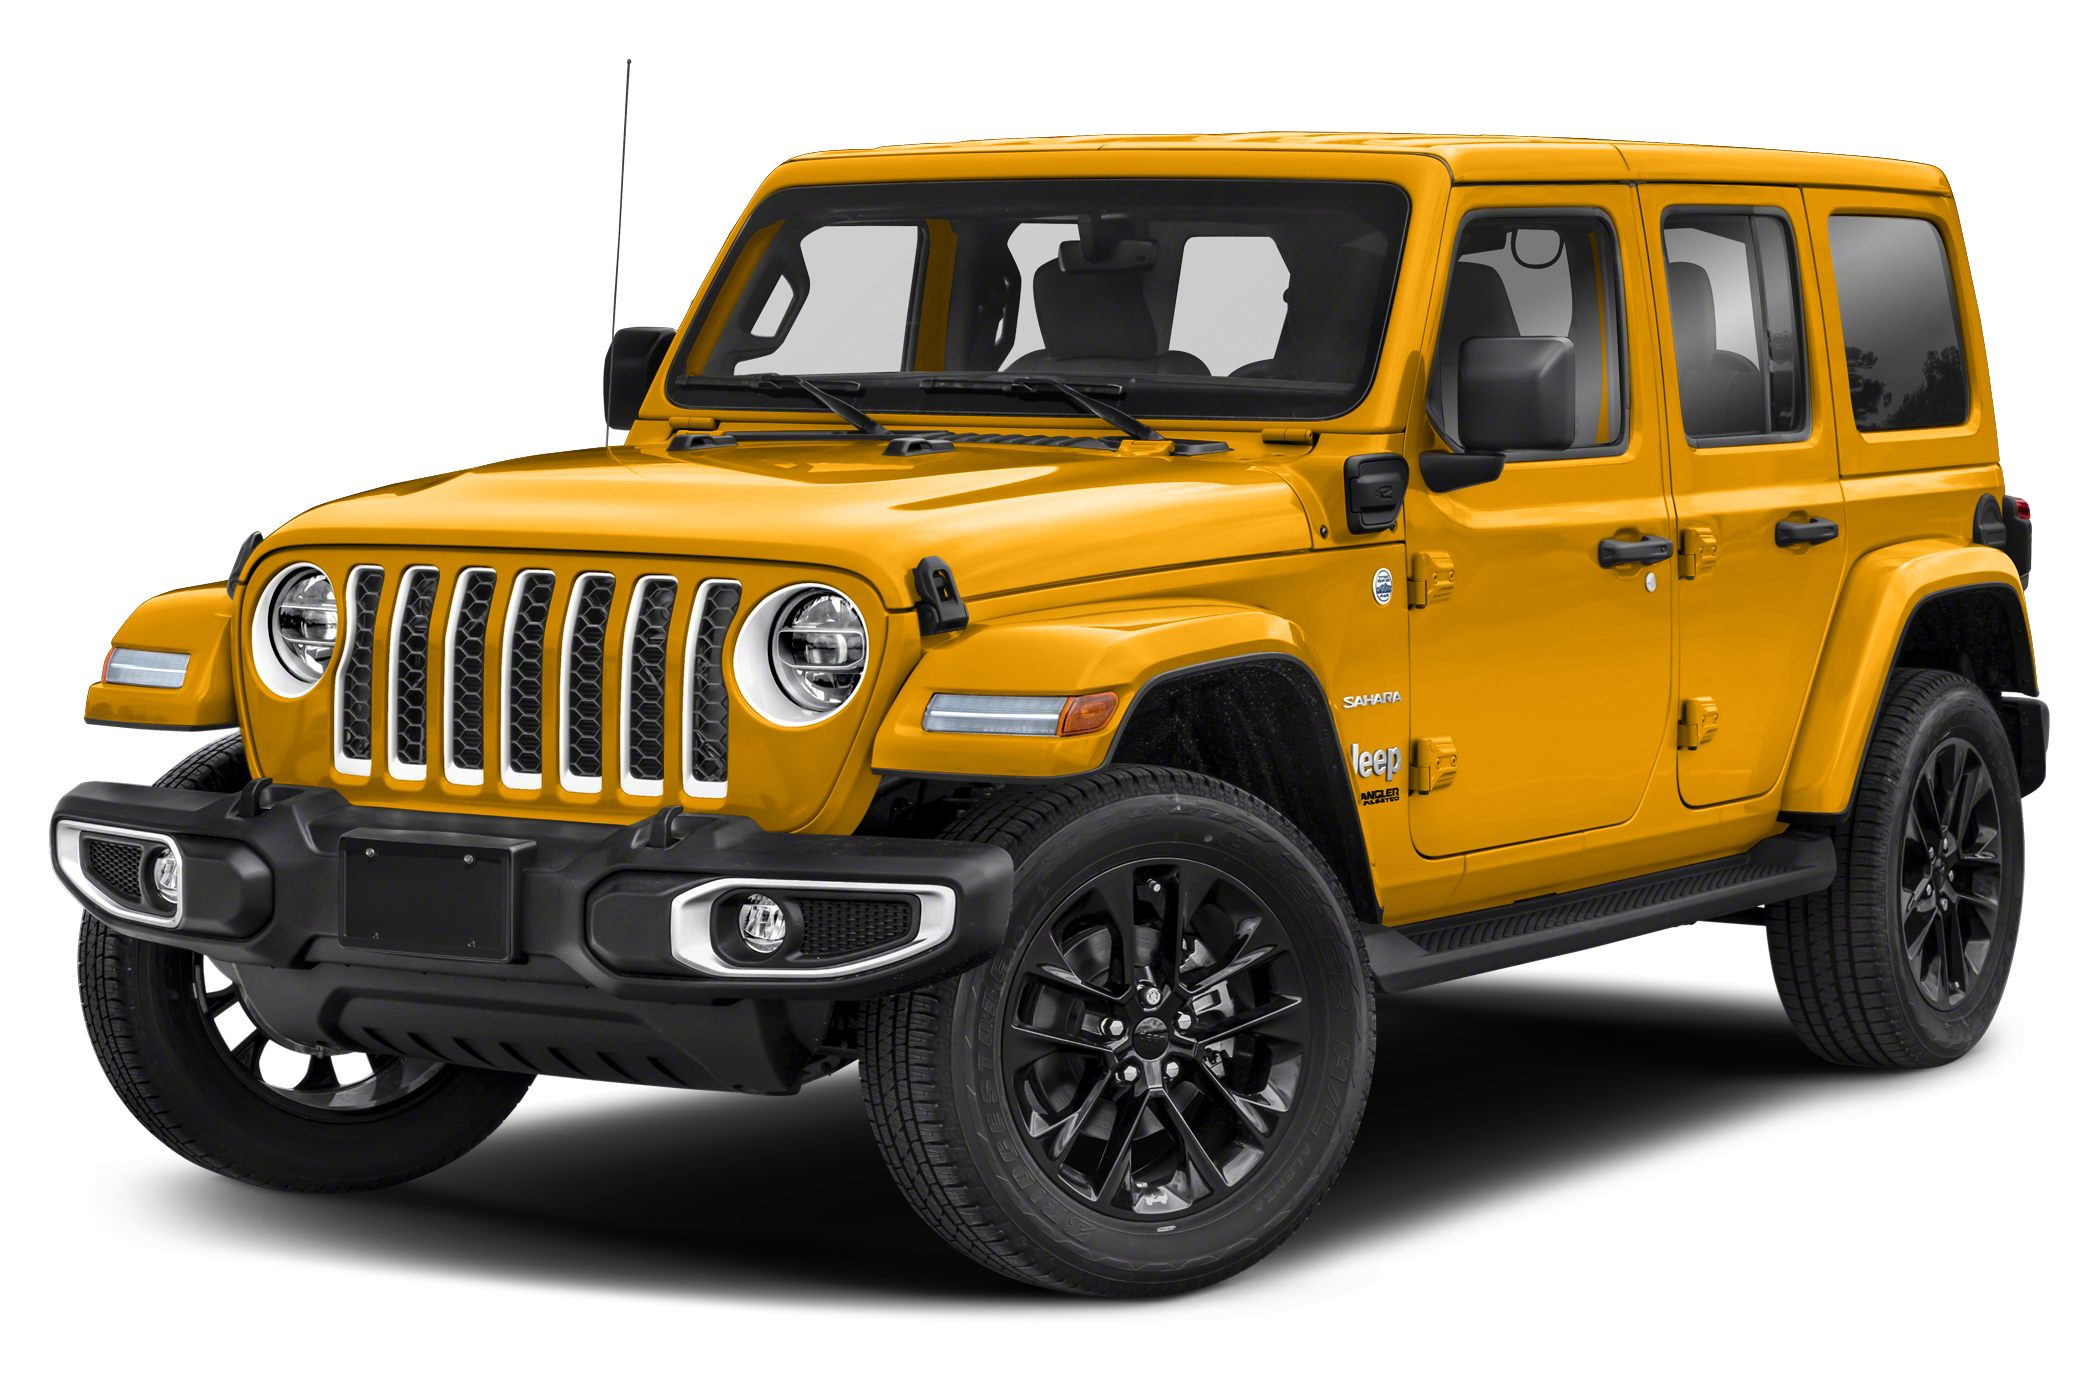 Jeep Wrangler Tuscadero Pink extended, racks up 30,000 orders - Autoblog